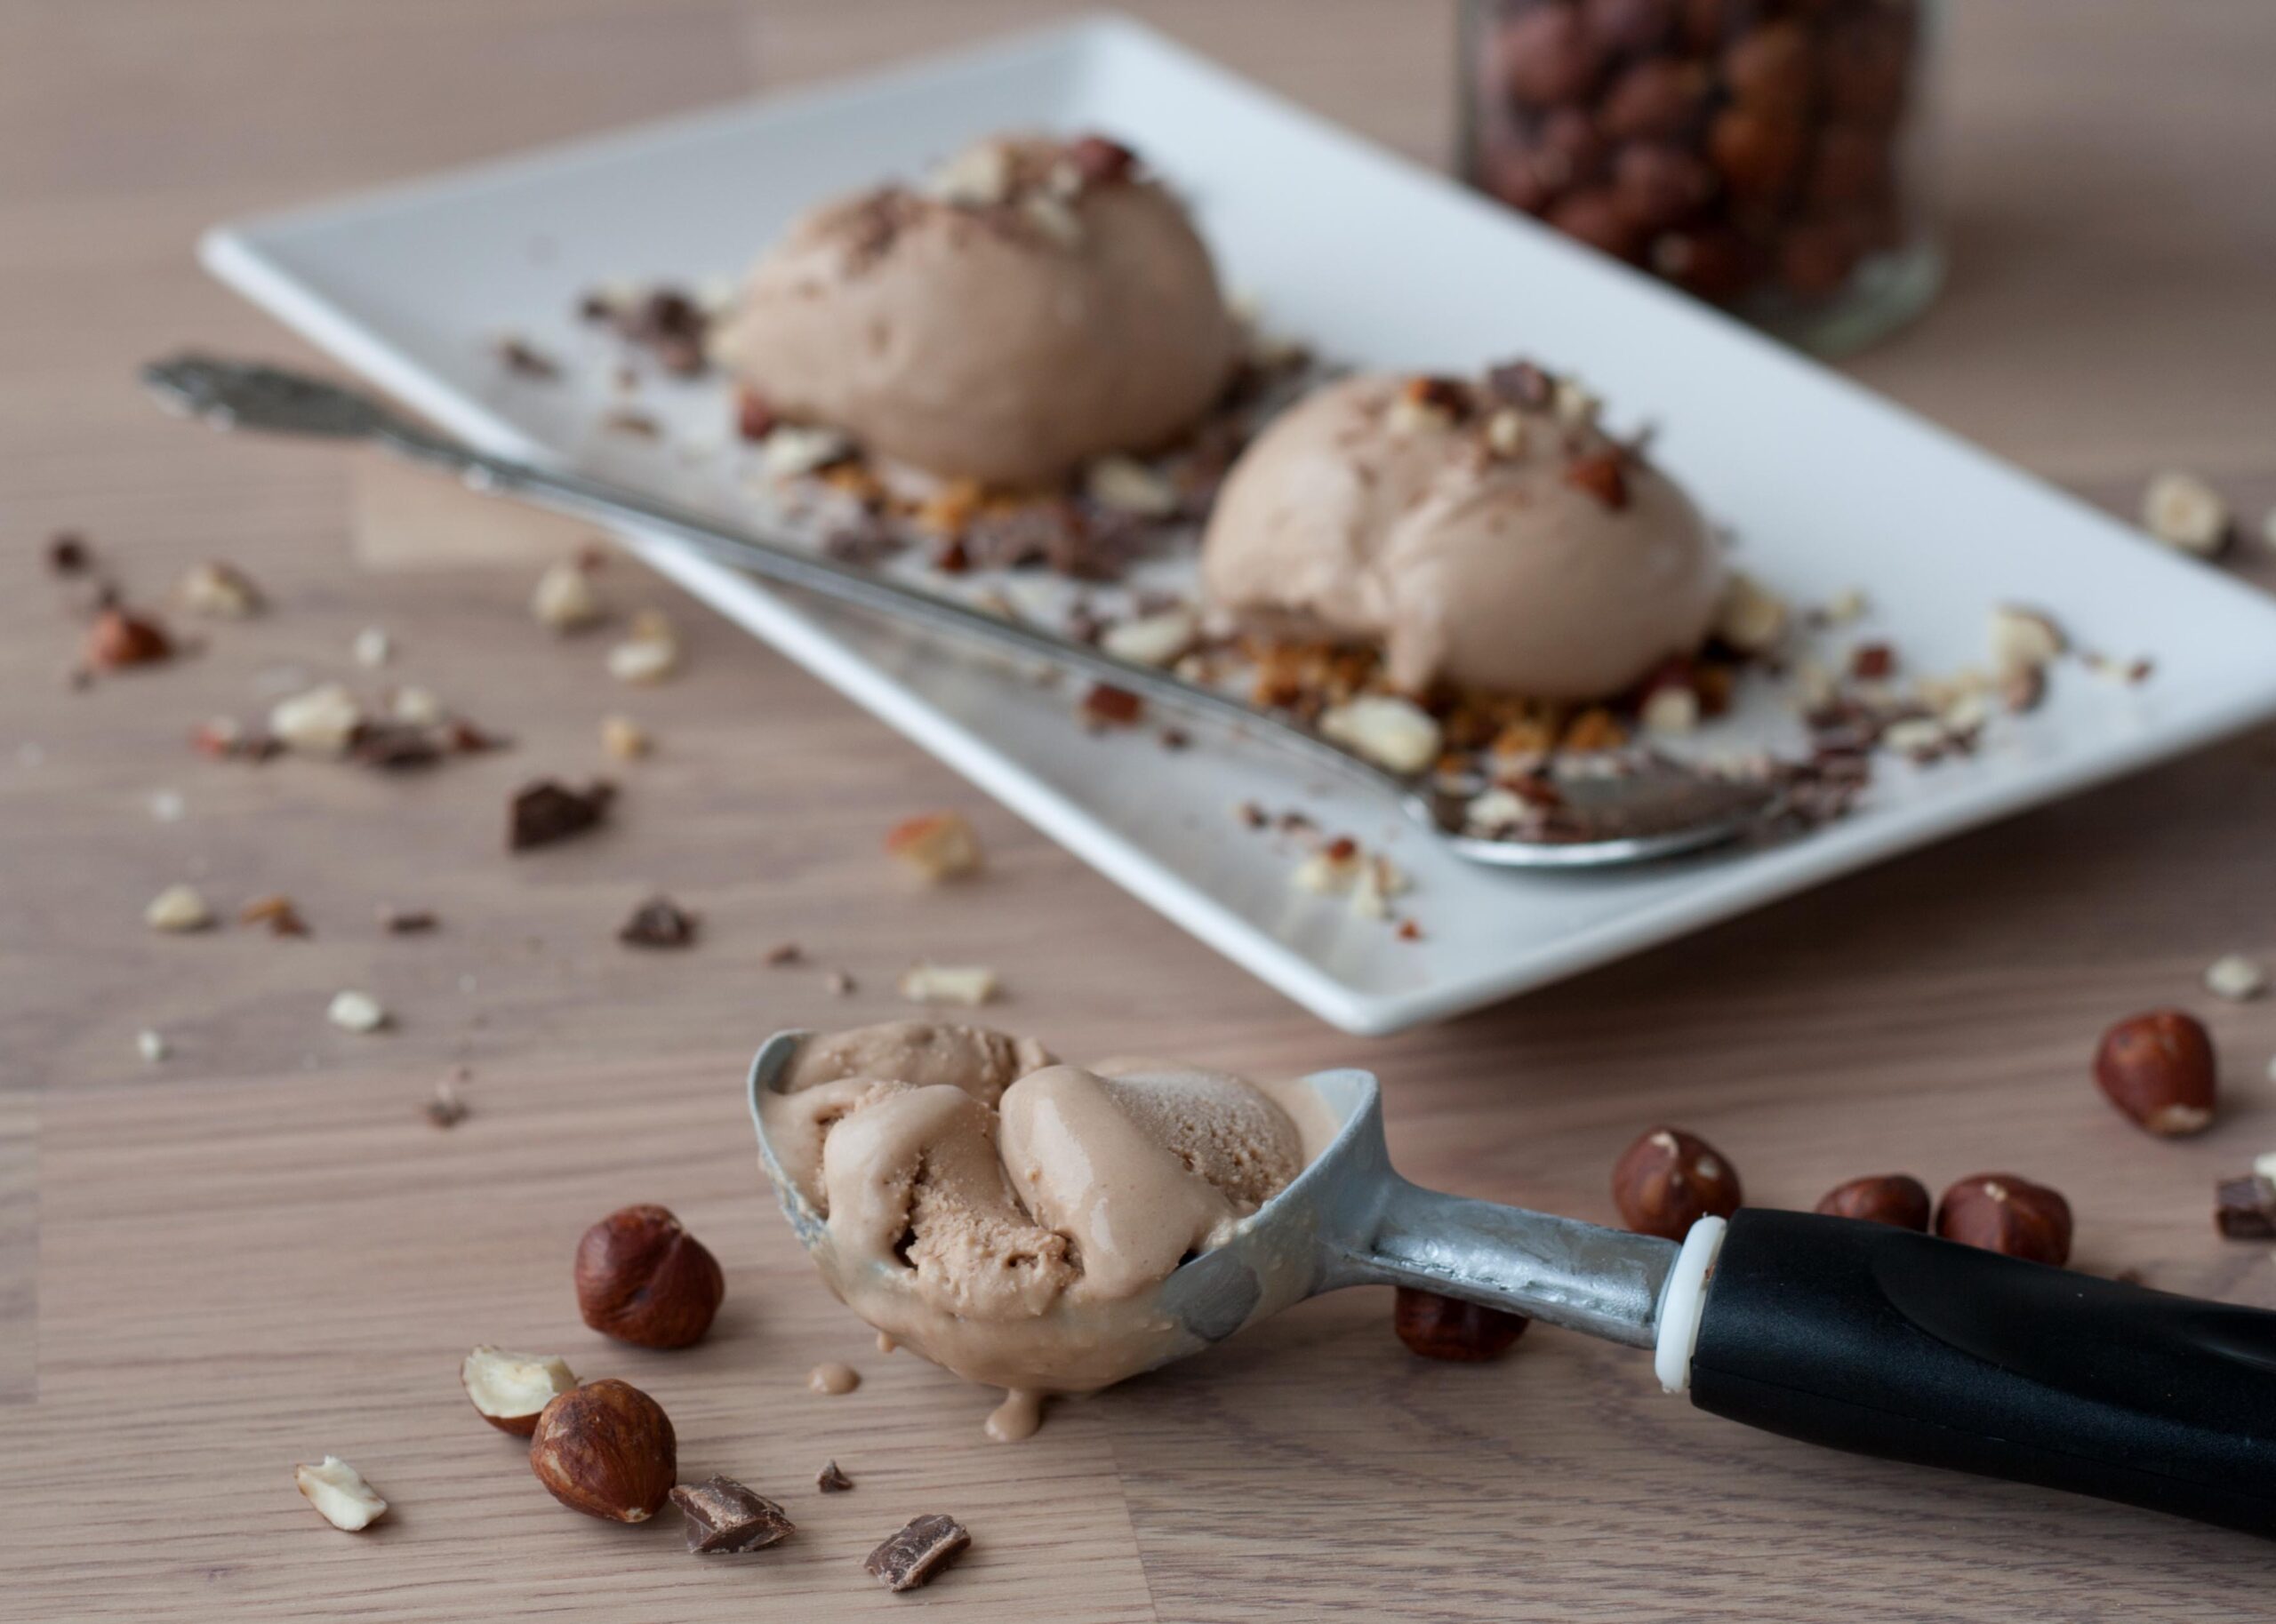 Recipe for Hazelnut Ice Cream with Chocolate